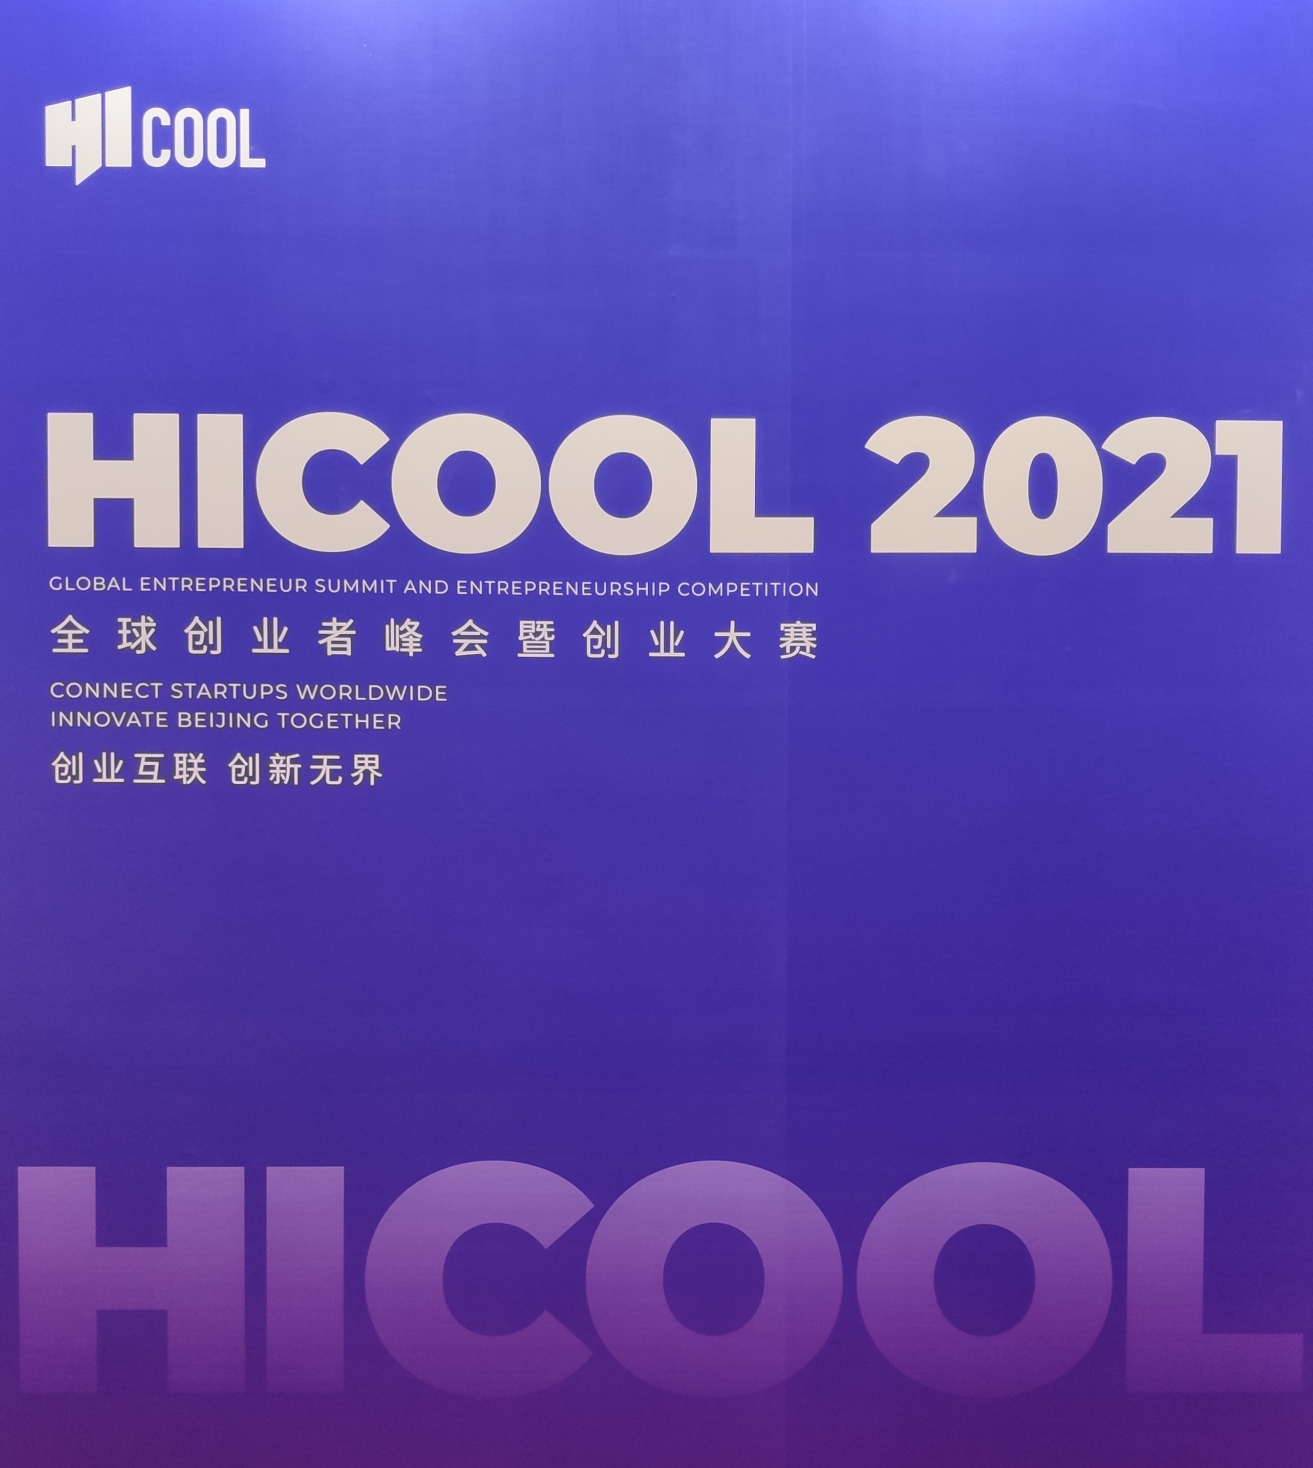 MEXCHAM’s participation at HiCOOL Global Entrepreneurship Summit